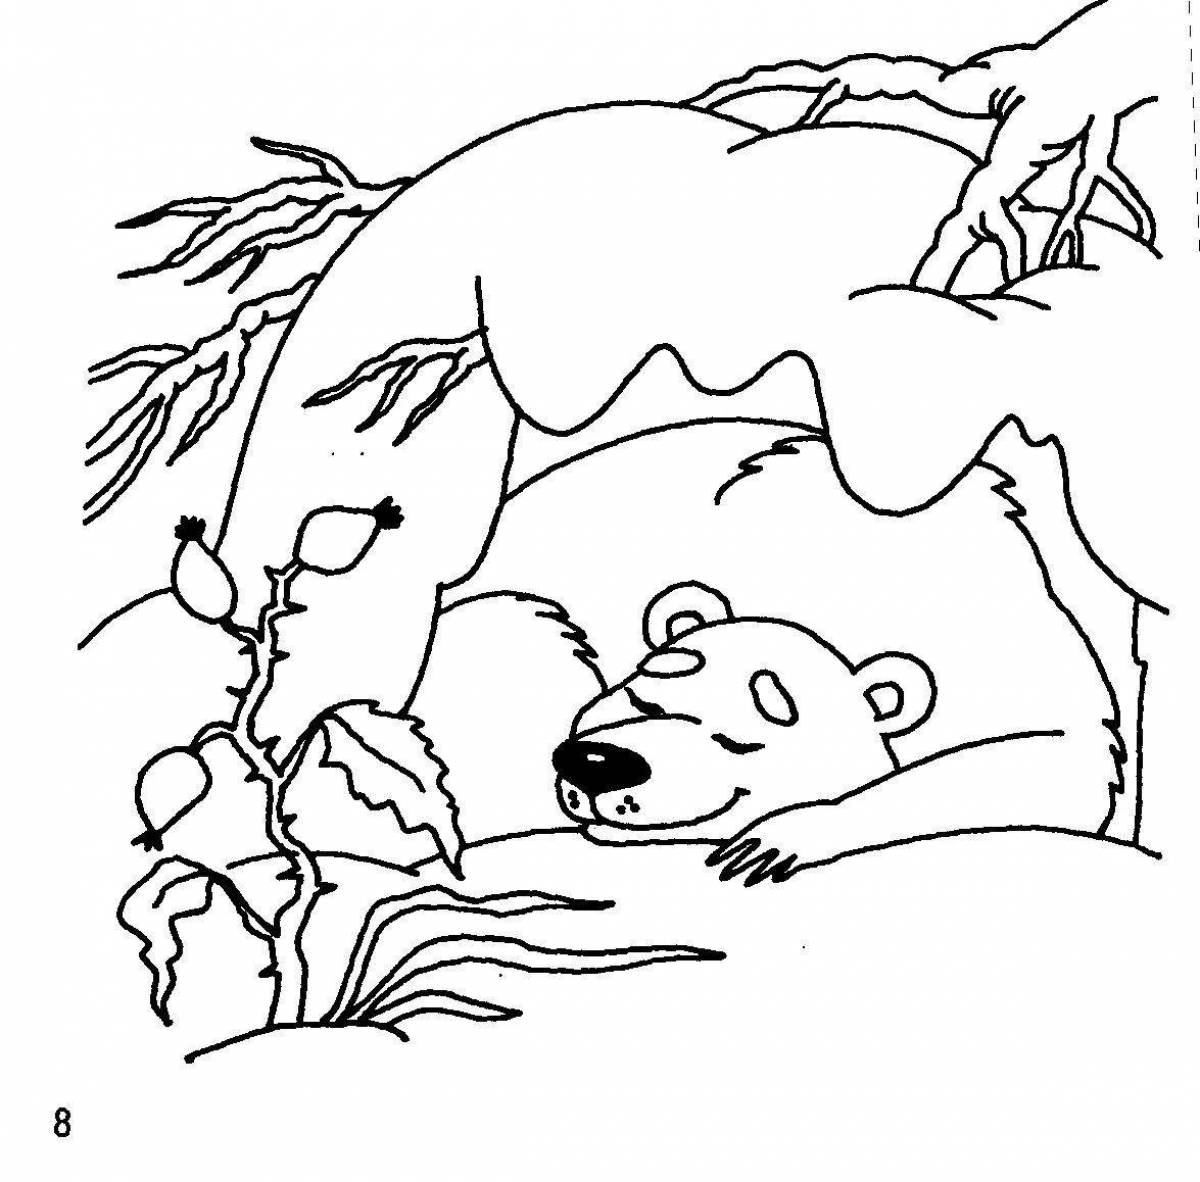 Cute bear in the den coloring book